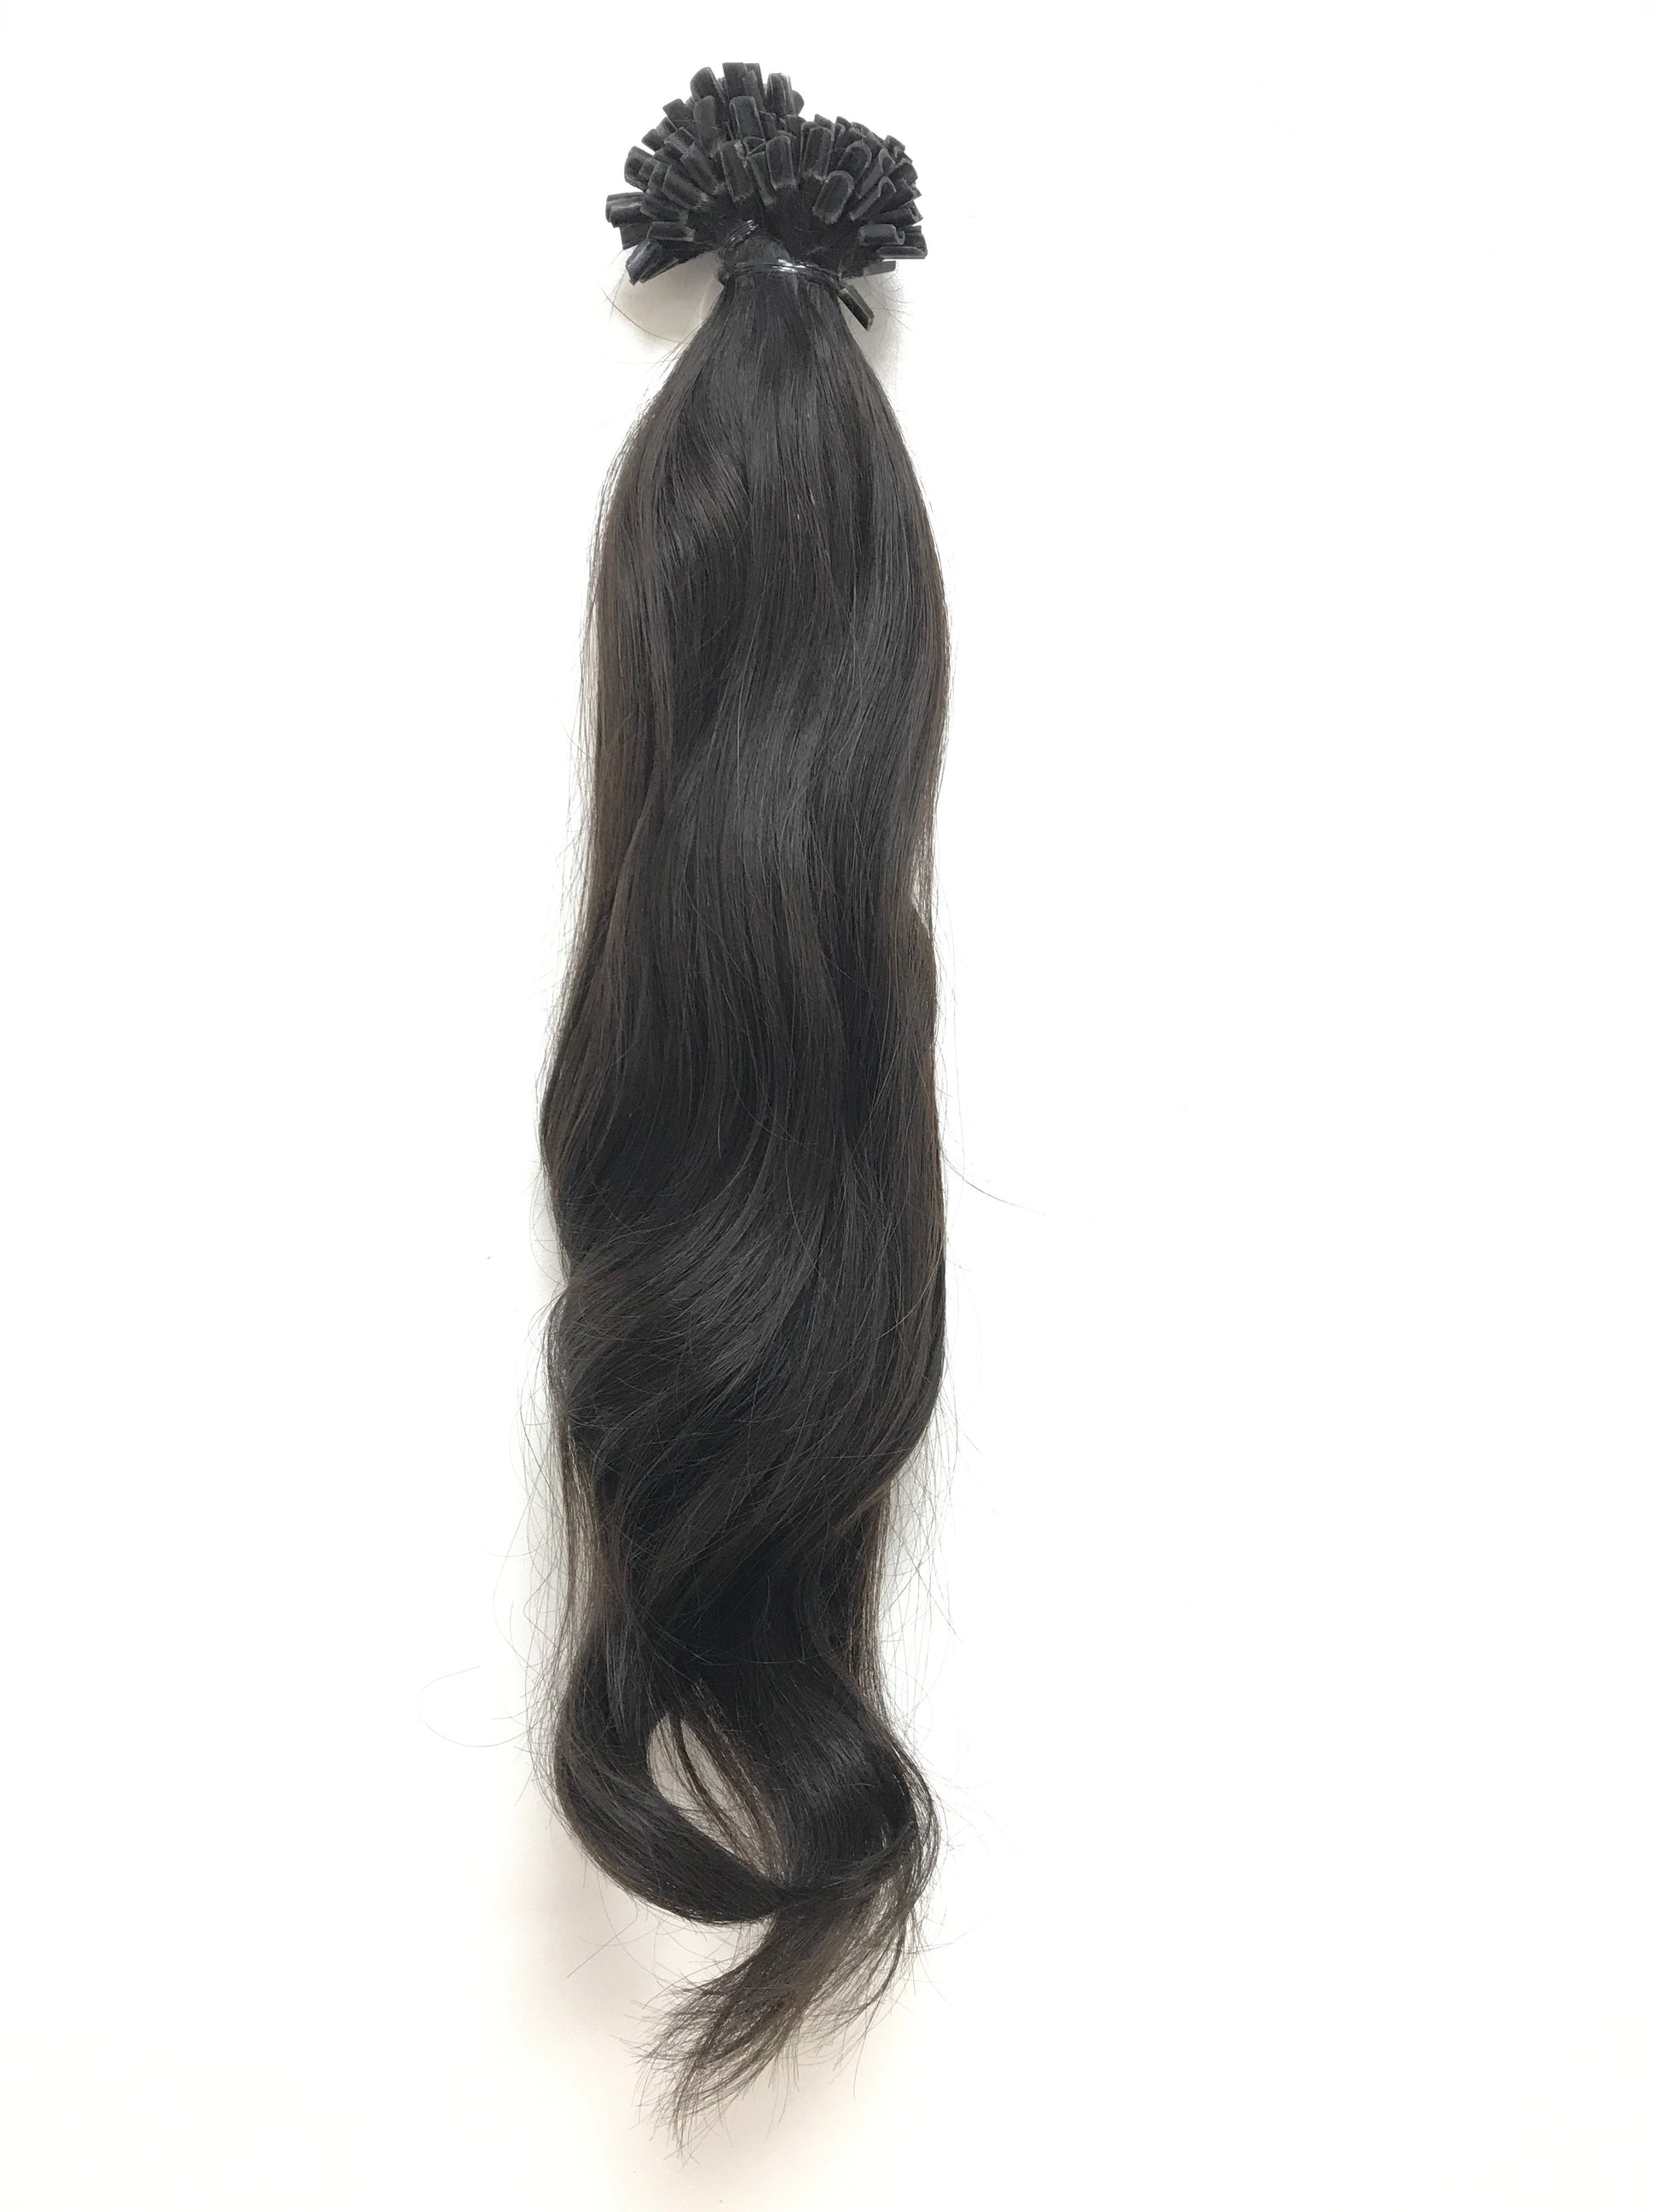 Brazilian Virgin Remy Human Hair, Nail-Tips, Wavy, 20'', Virgin, Quick Shipping!-Virgin Hair & Beauty, The Best Hair Extensions, Real Virgin Human Hair.